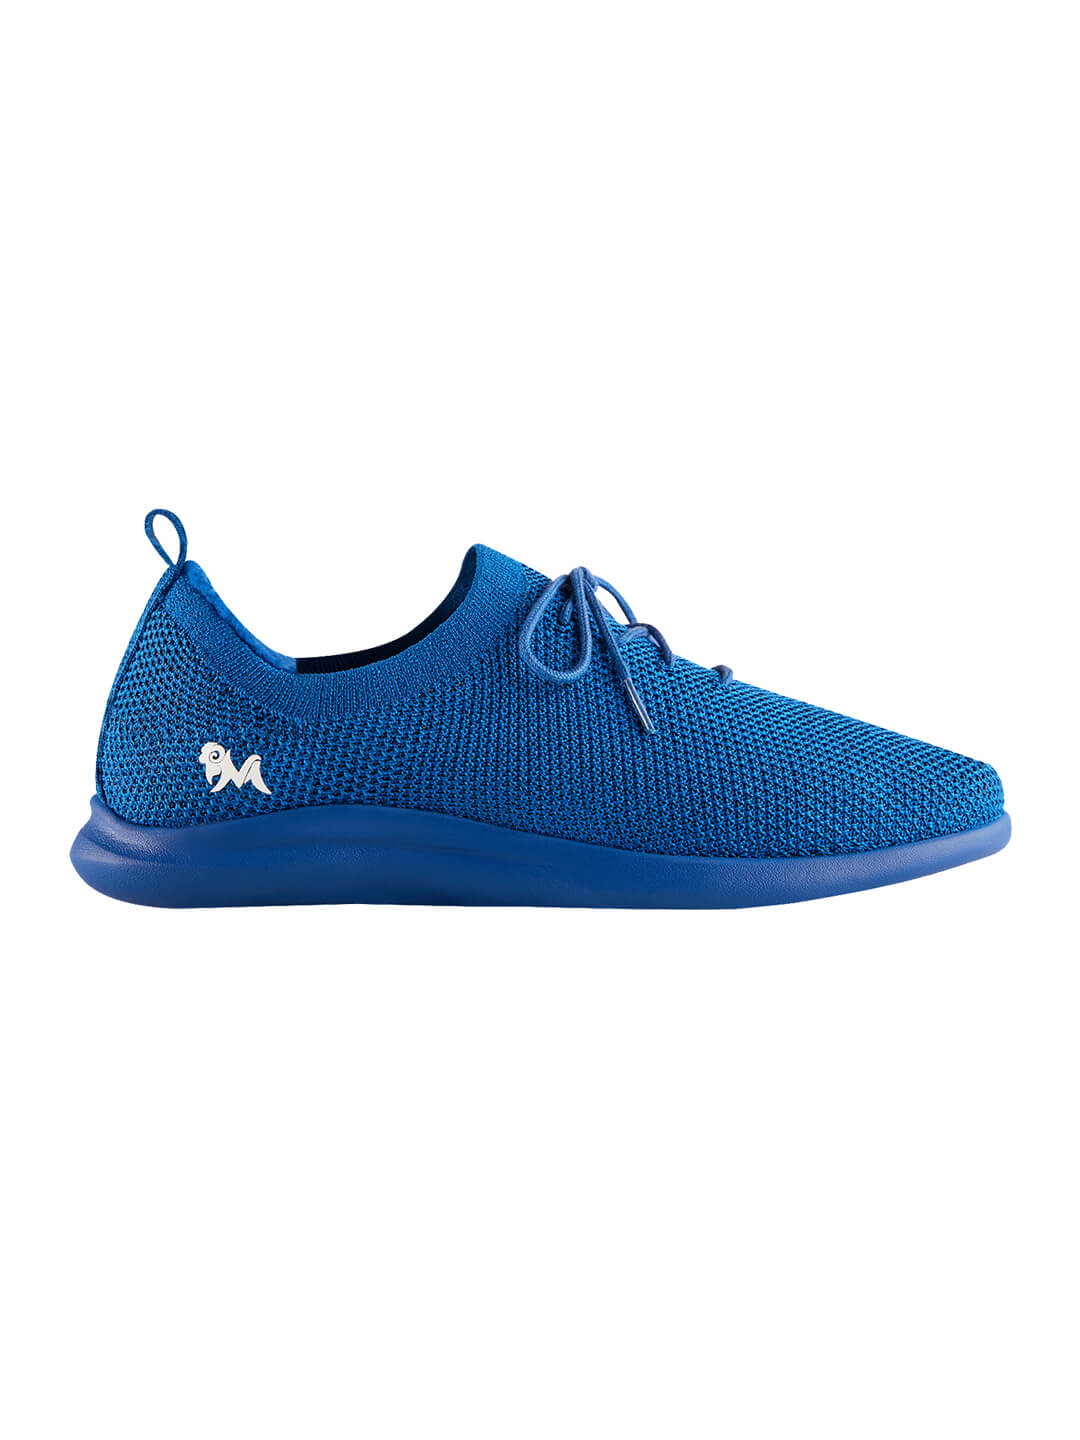  Footwear, Unisex Footwear, Blue Sneakers